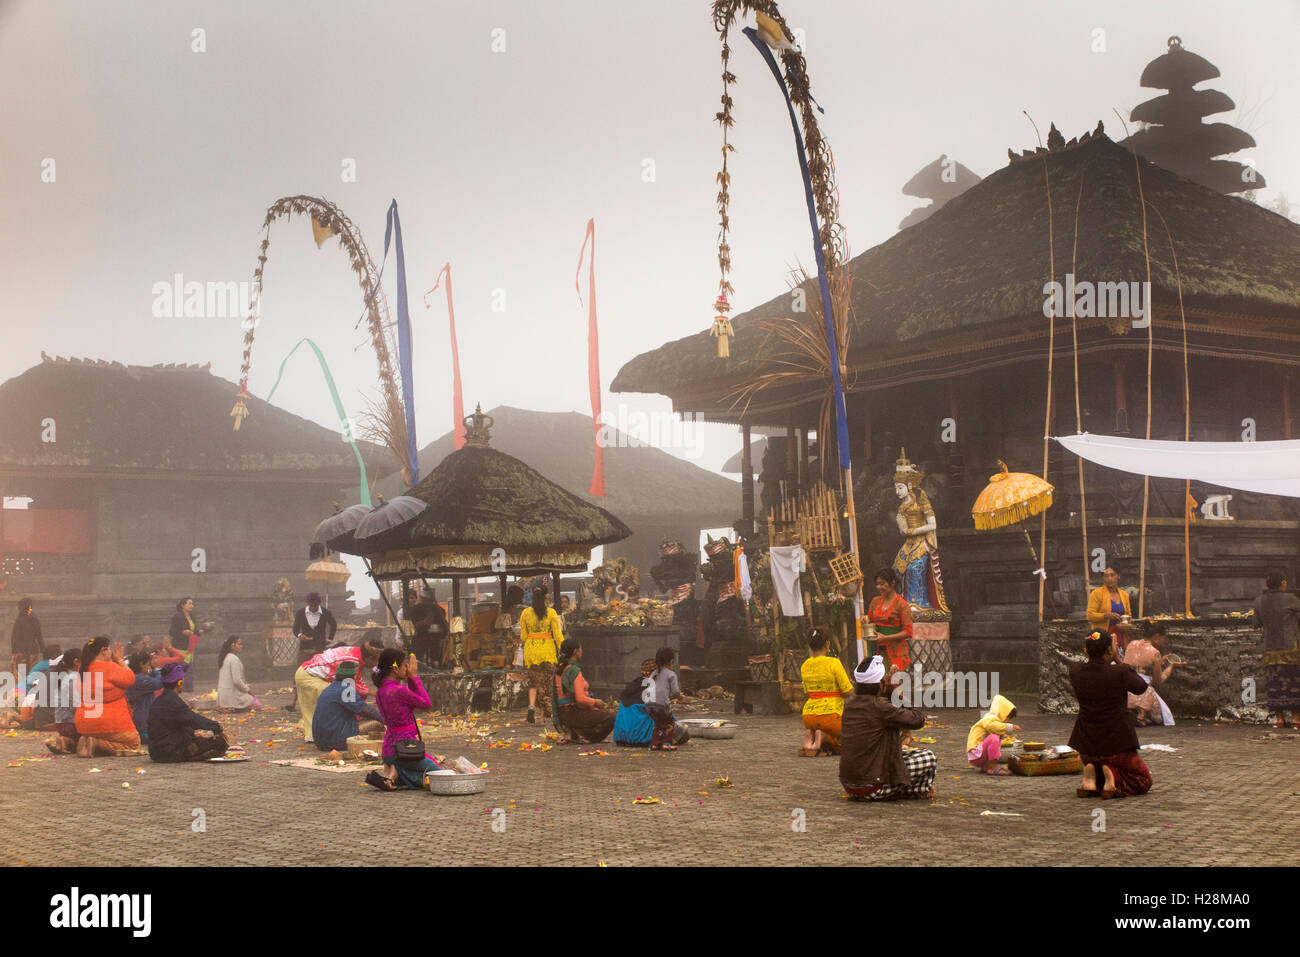 Indonesia, Bali, Batur, Pura Ulun Danu Batur, Kuningan festival worshippers praying in early morning low cloud Stock Photo